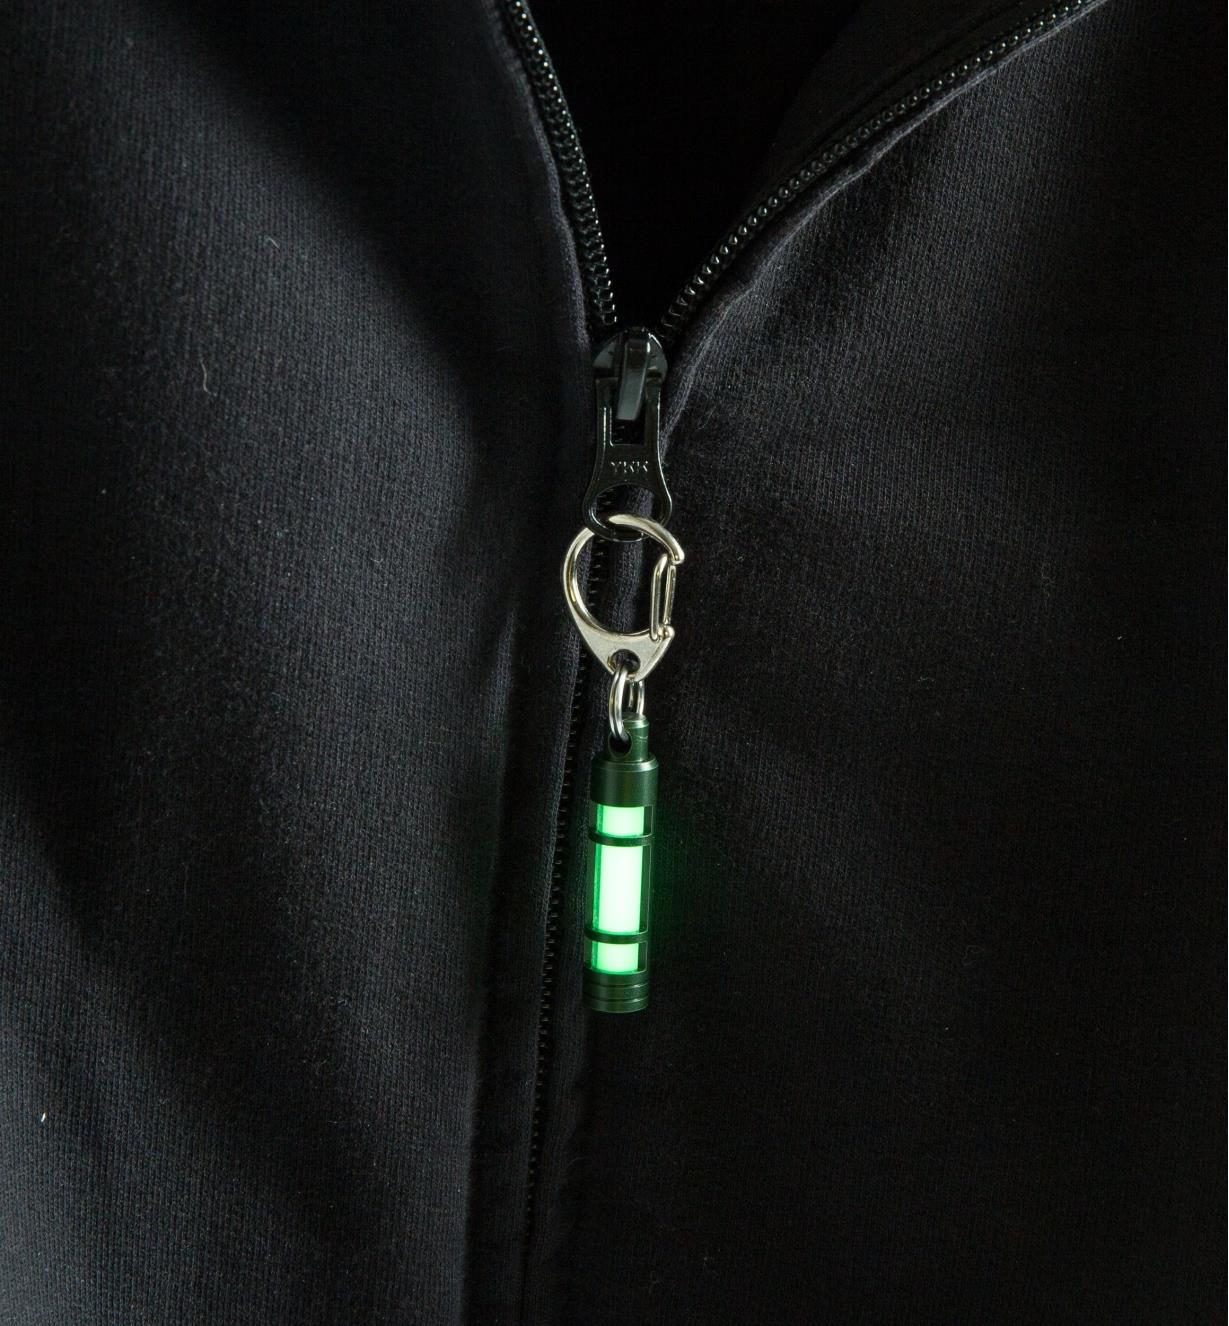 TEC Glow Fob hanging from a sweatshirt zipper, glowing in the dark